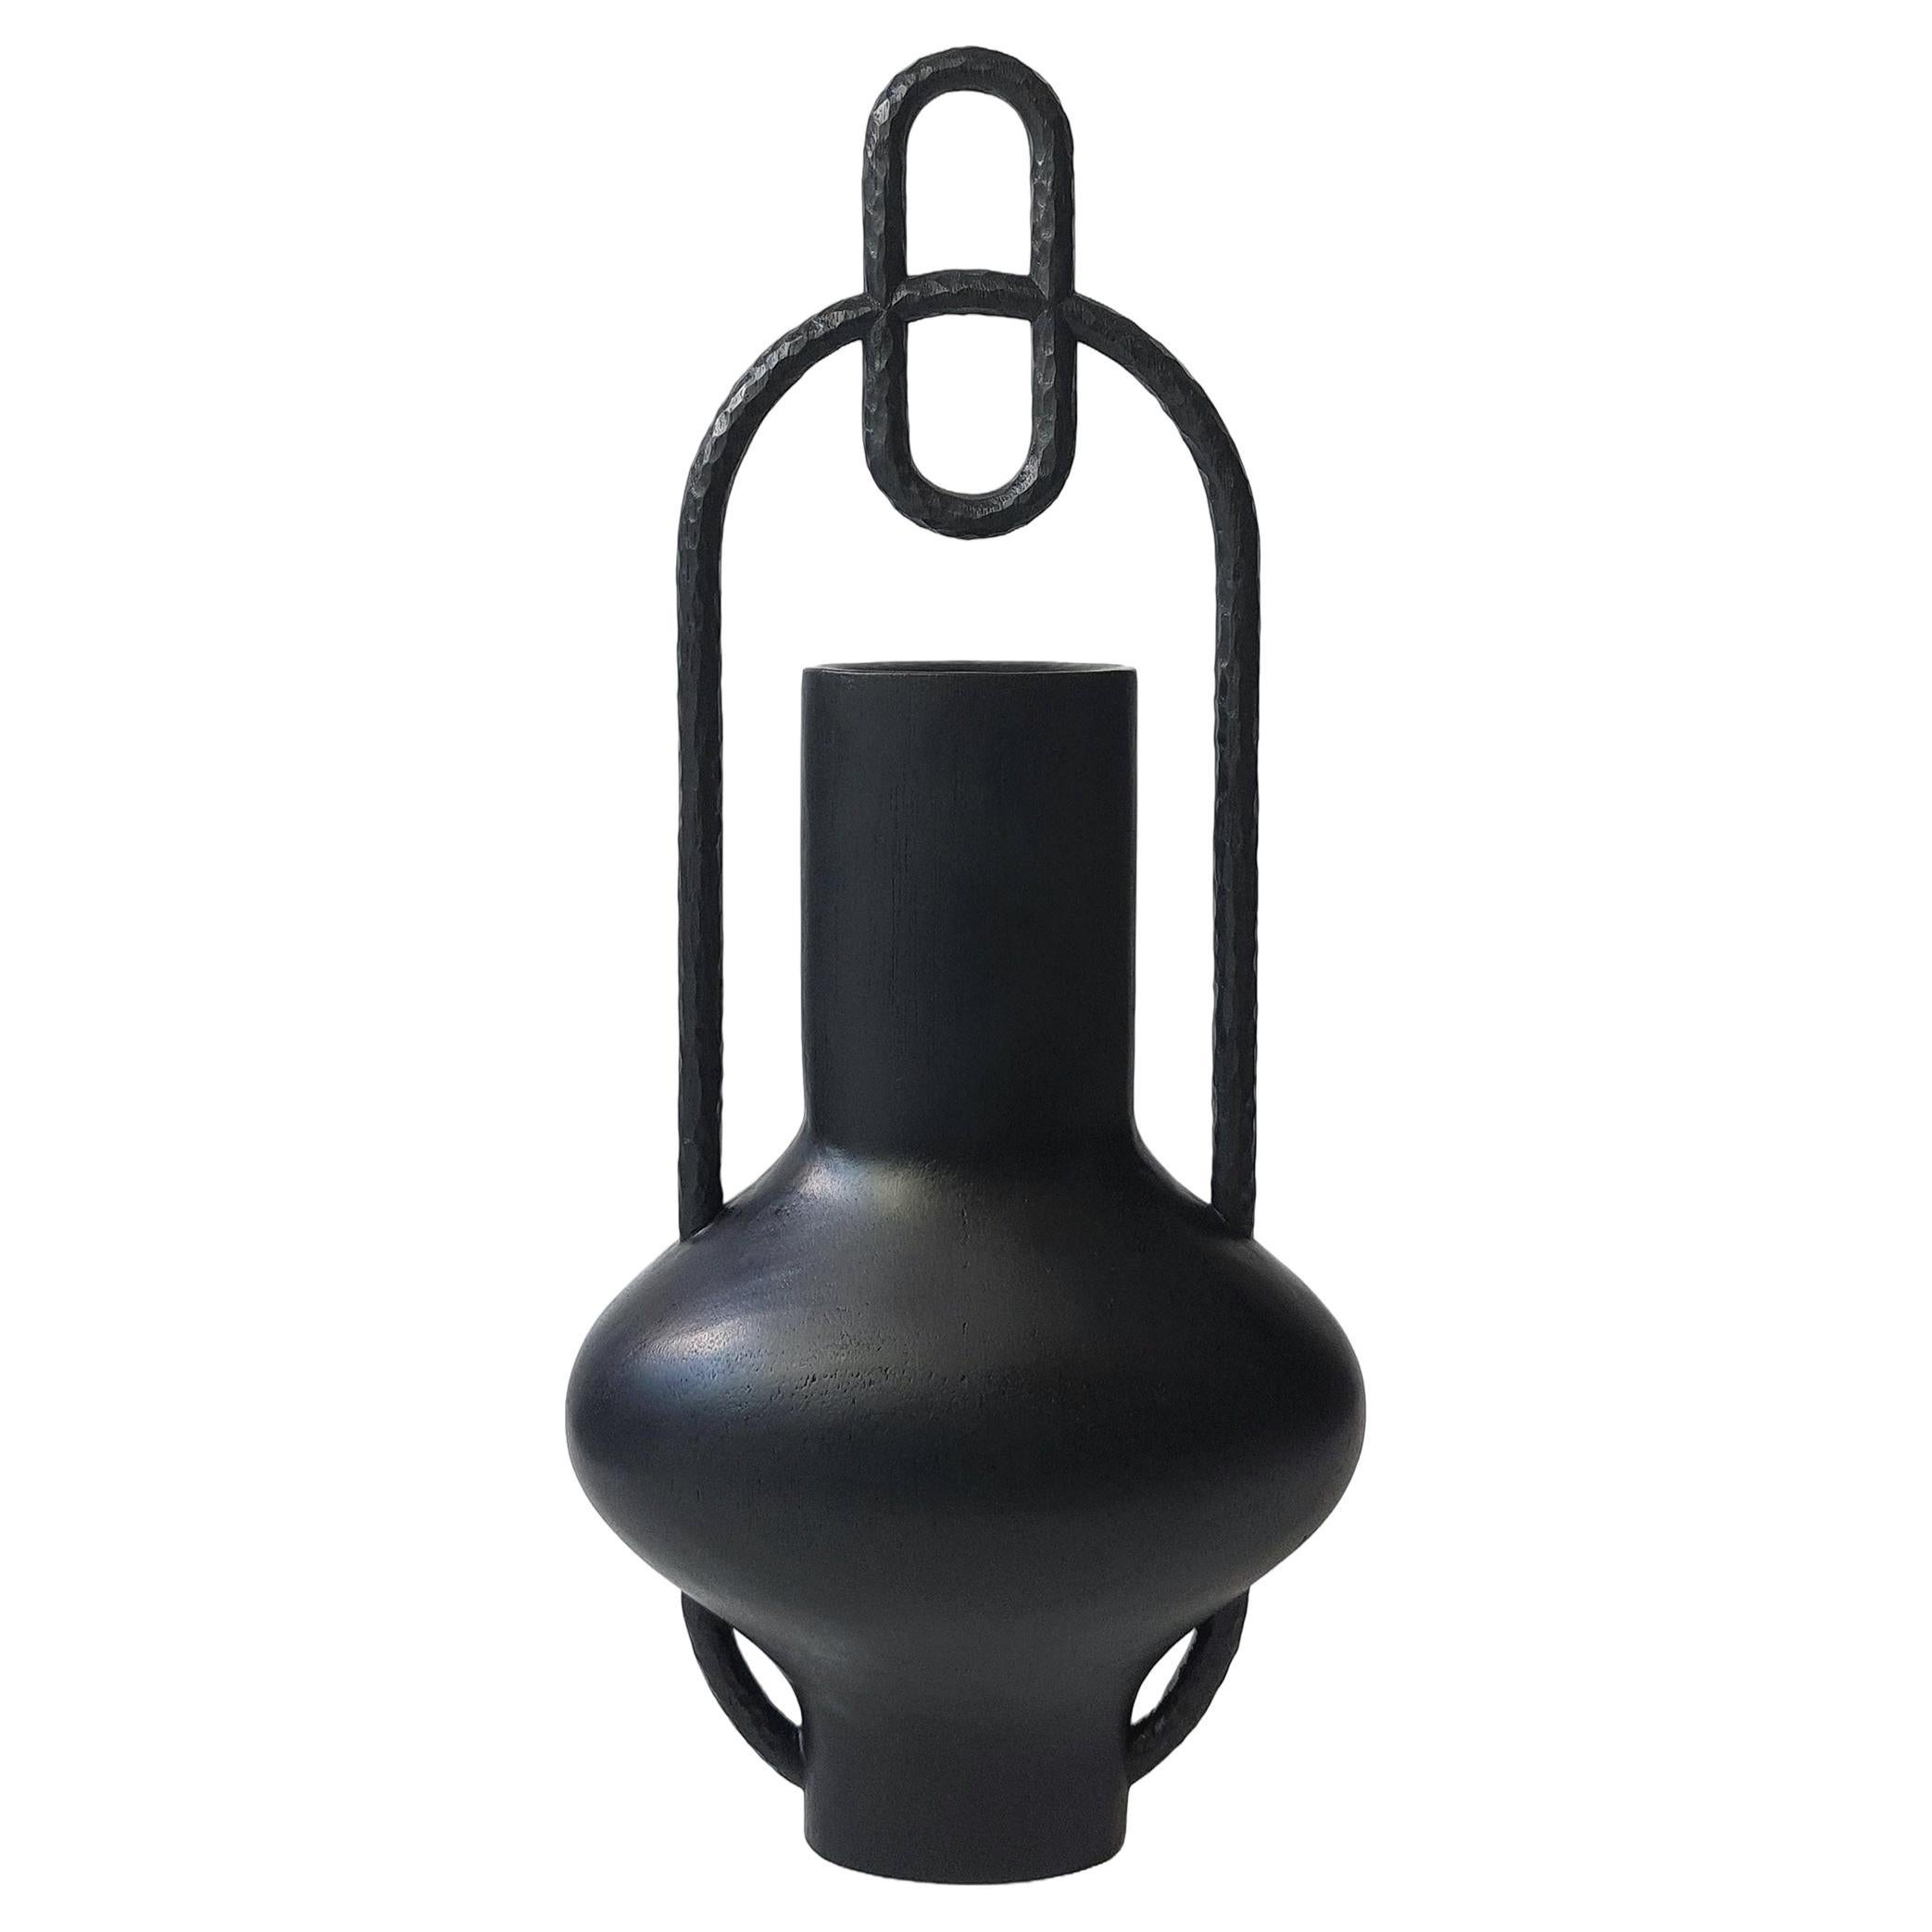 Halo Vase III, Brazilian Contemporary Design, by Estúdio Carmine For Sale